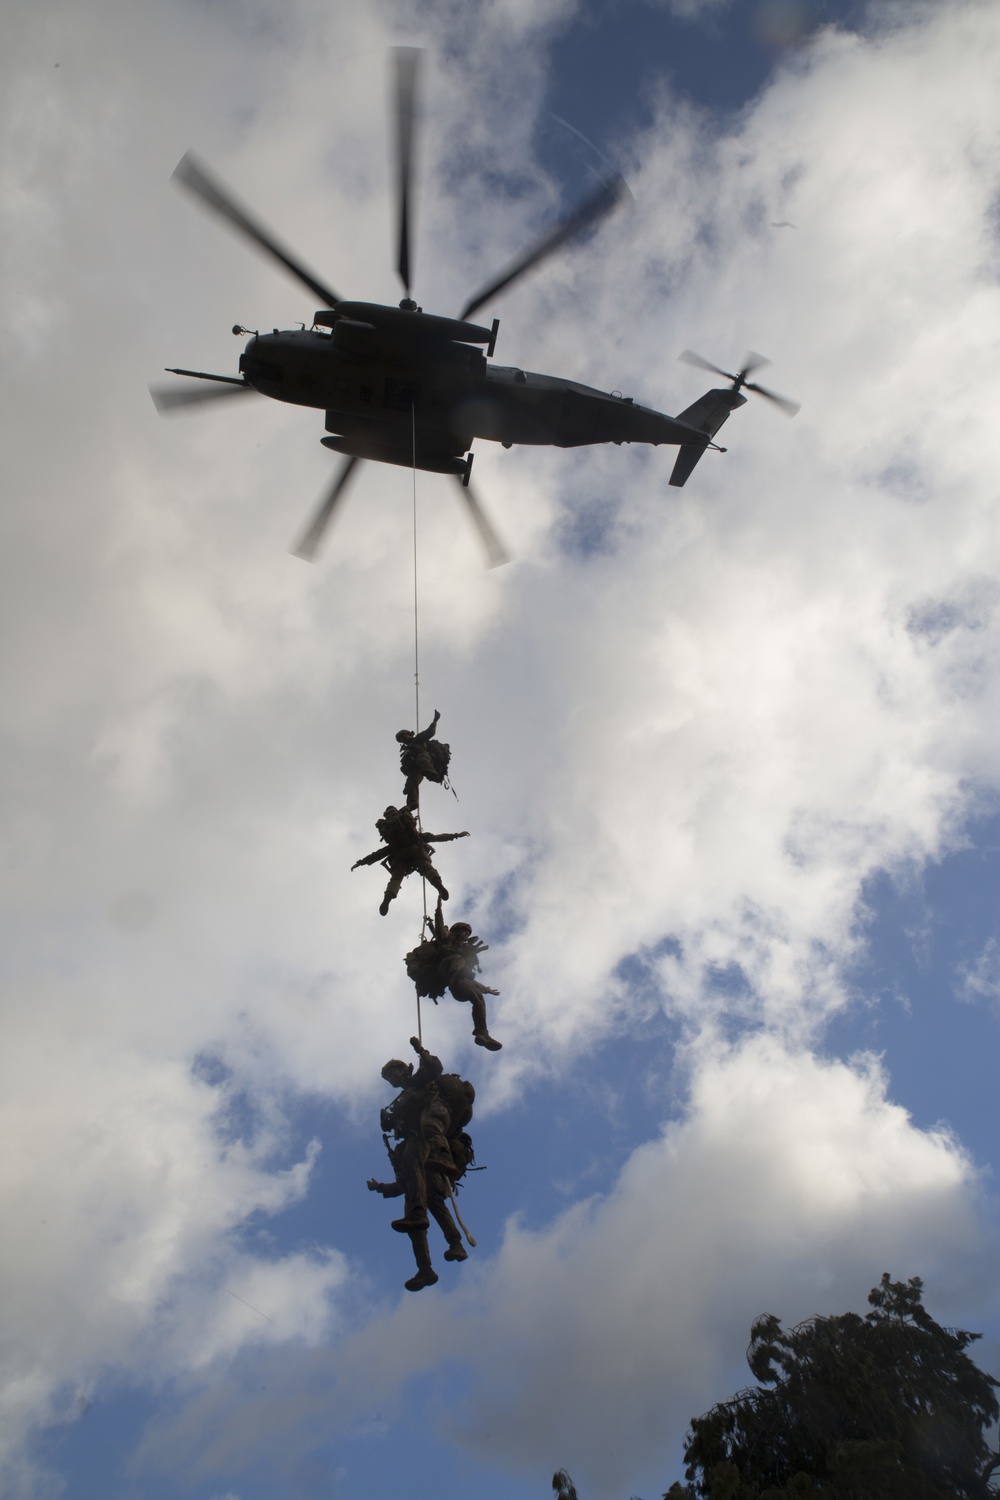 U.S. Service members participate in Reconnaissance Team Leaders Course